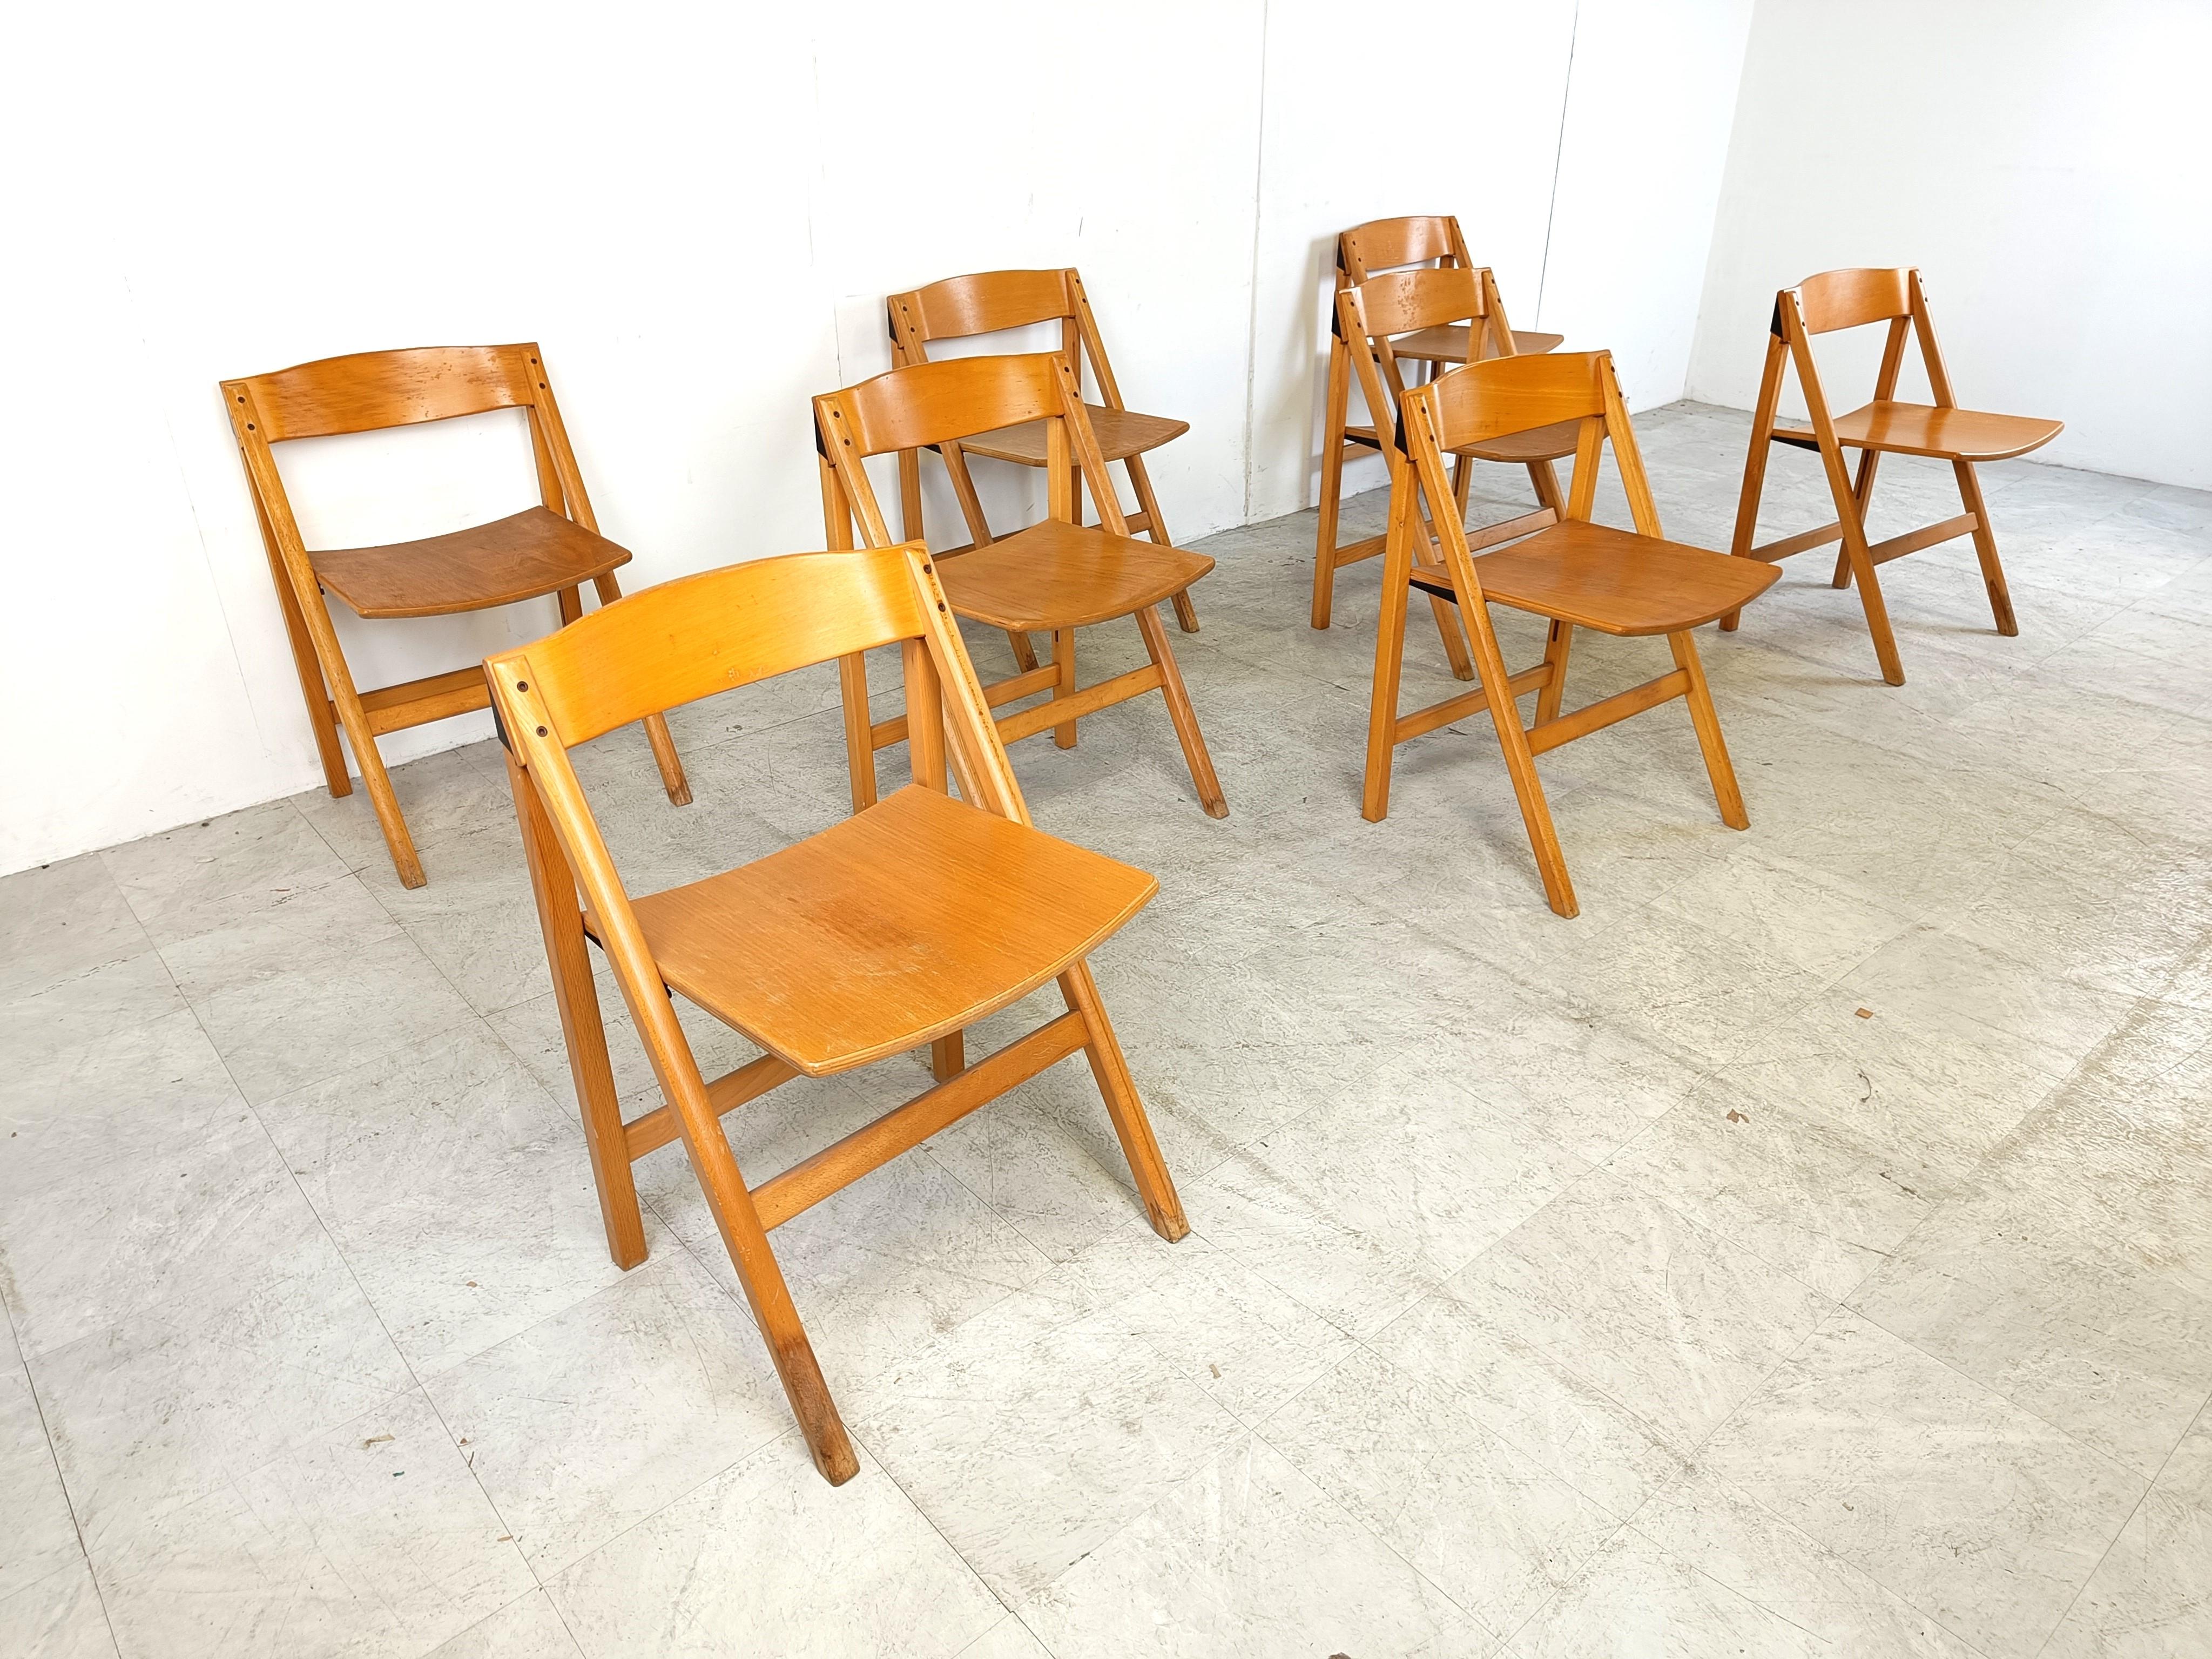 Danish Vintage scandinavian folding chairs by Hyllinge Mobler, 1970s - set of 8 For Sale